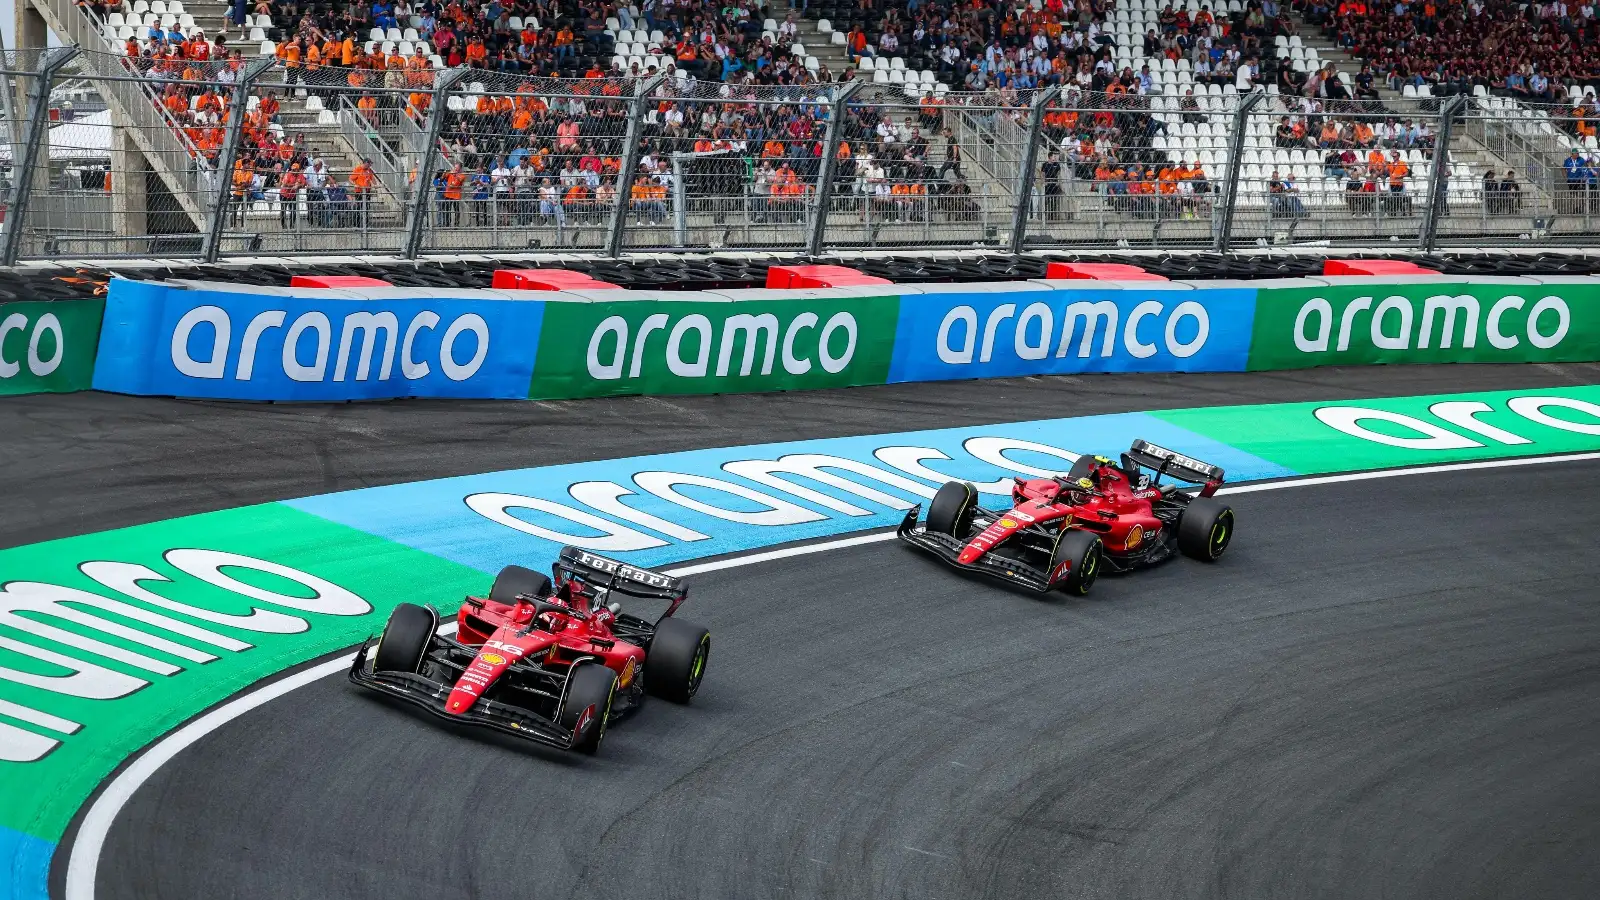 The Ferrari cars on the Zandvoort bank. F1 starting grid